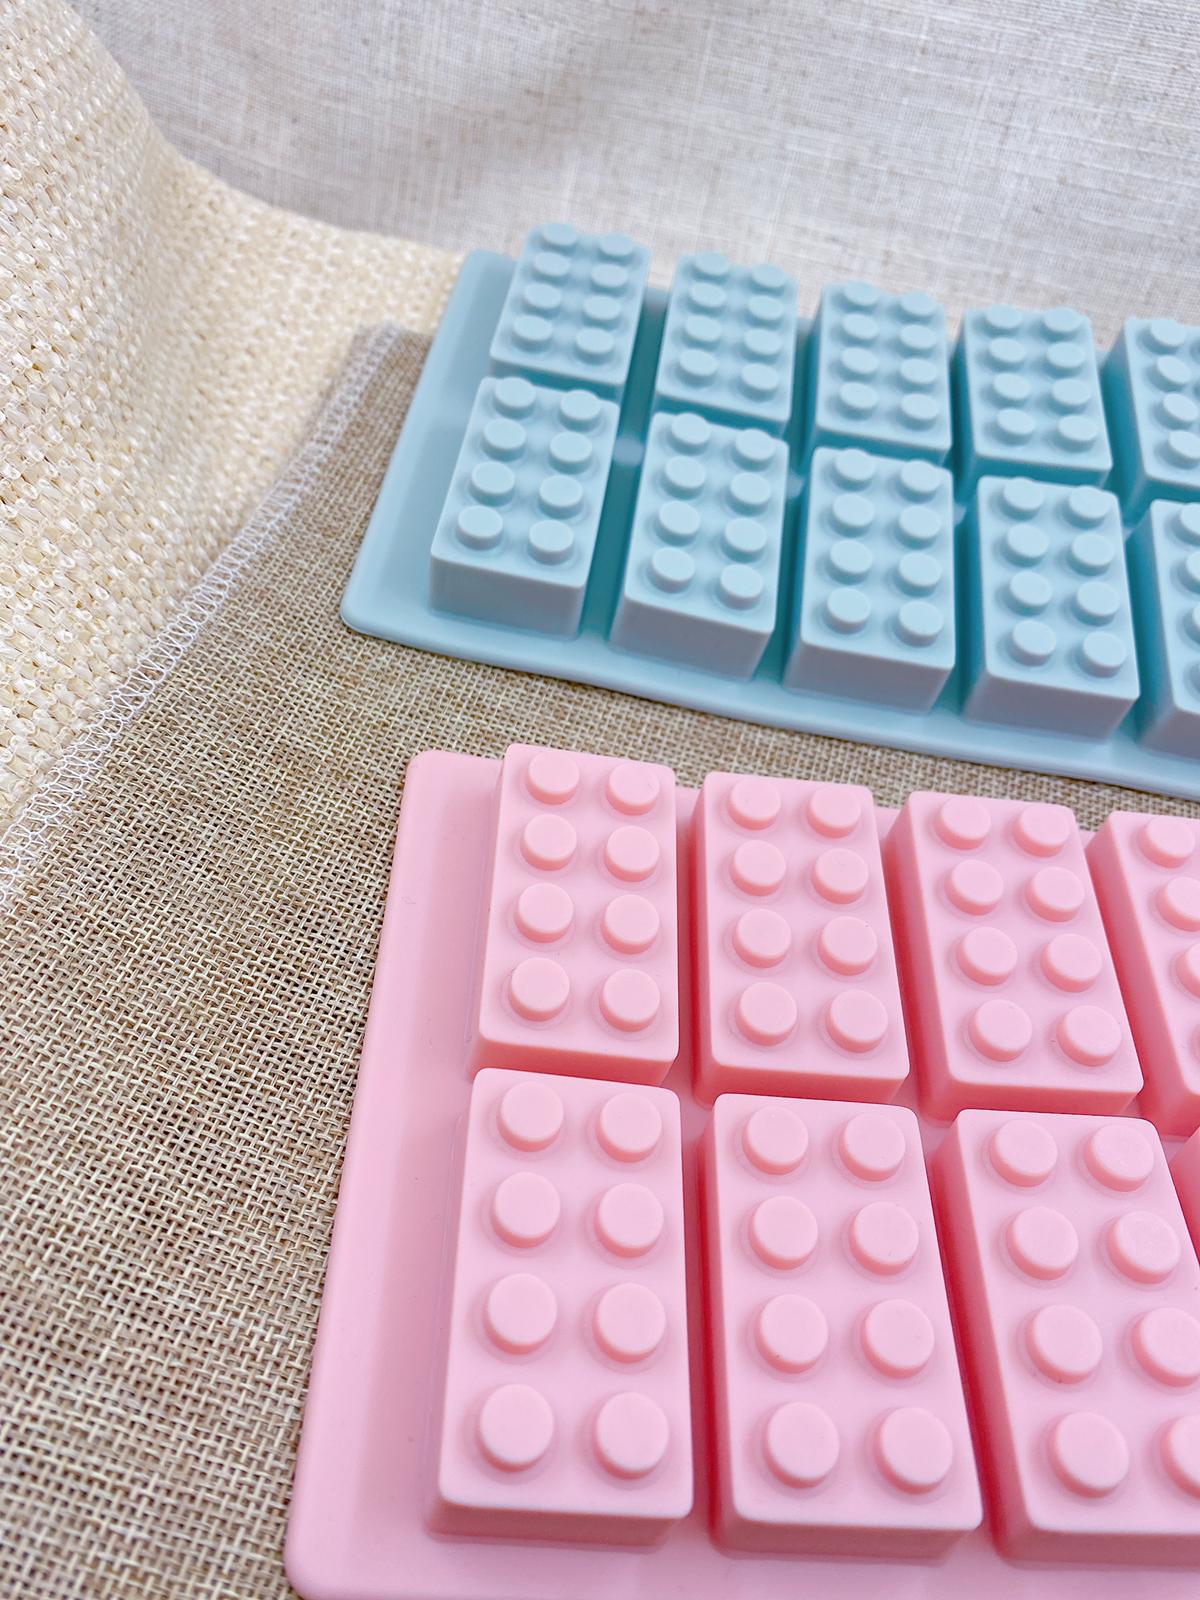 LEGO-積木-皂模具.jpg